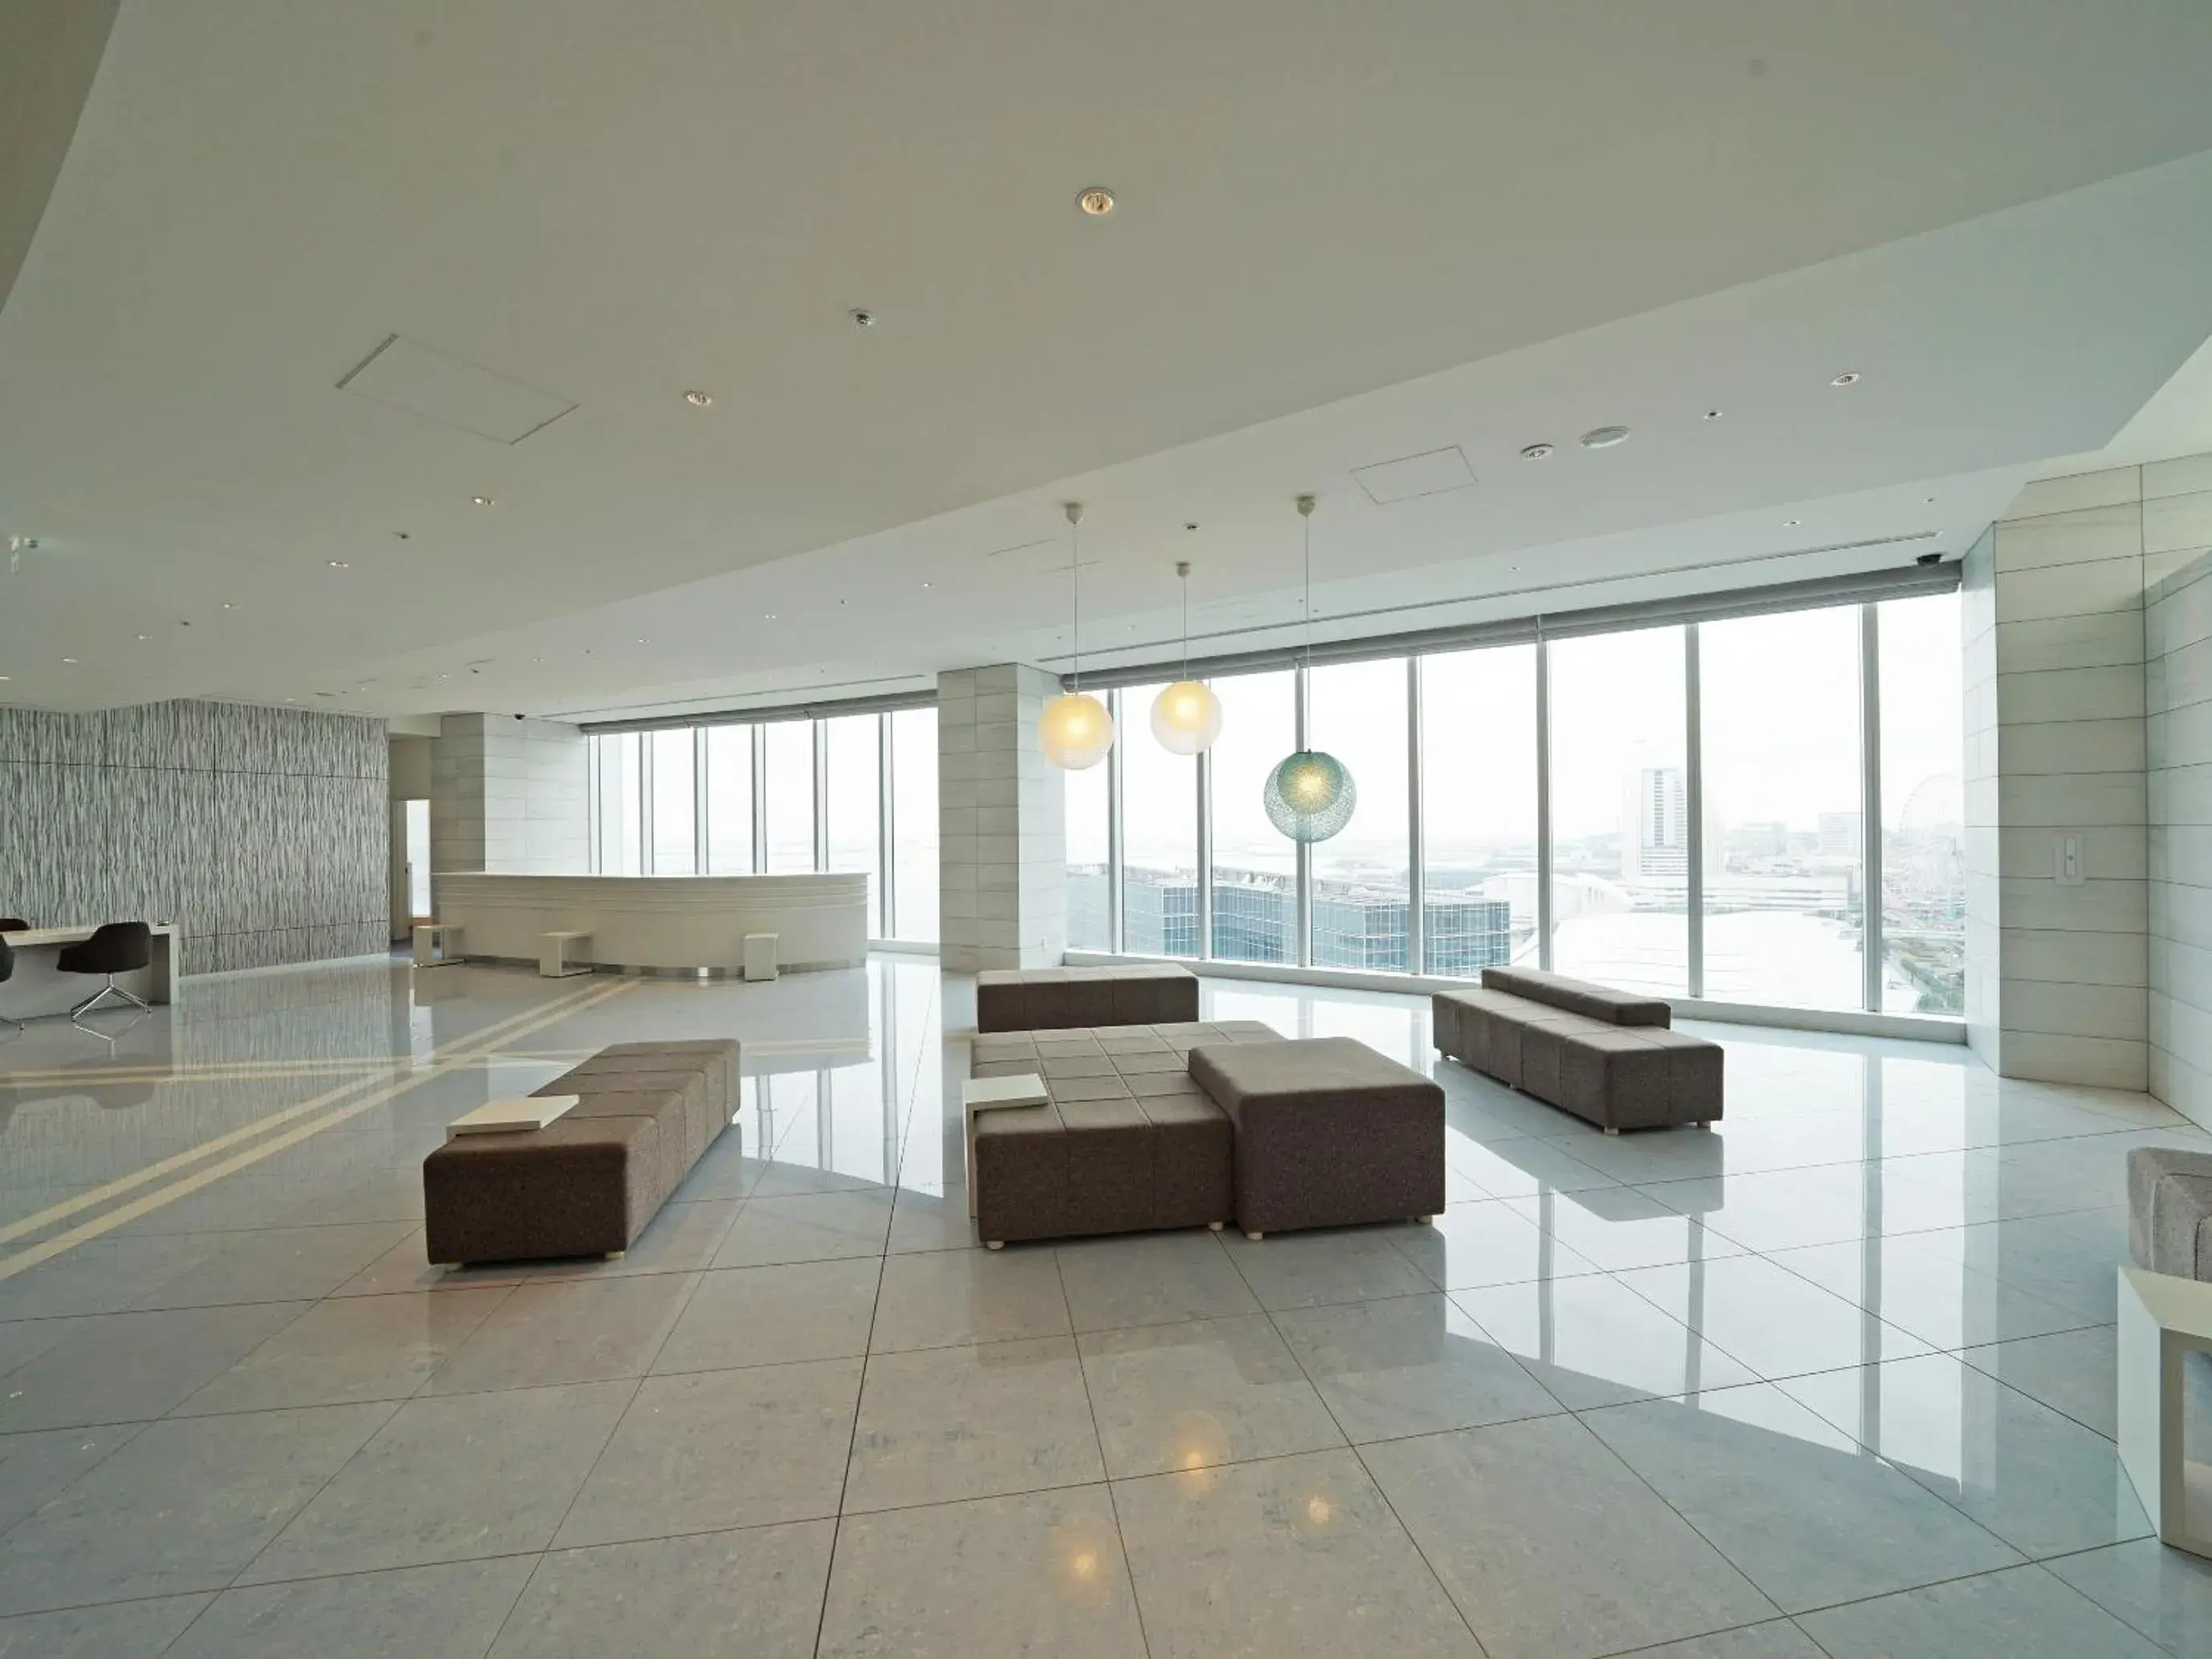 Lobby or reception in the square hotel Yokohama Minatomirai